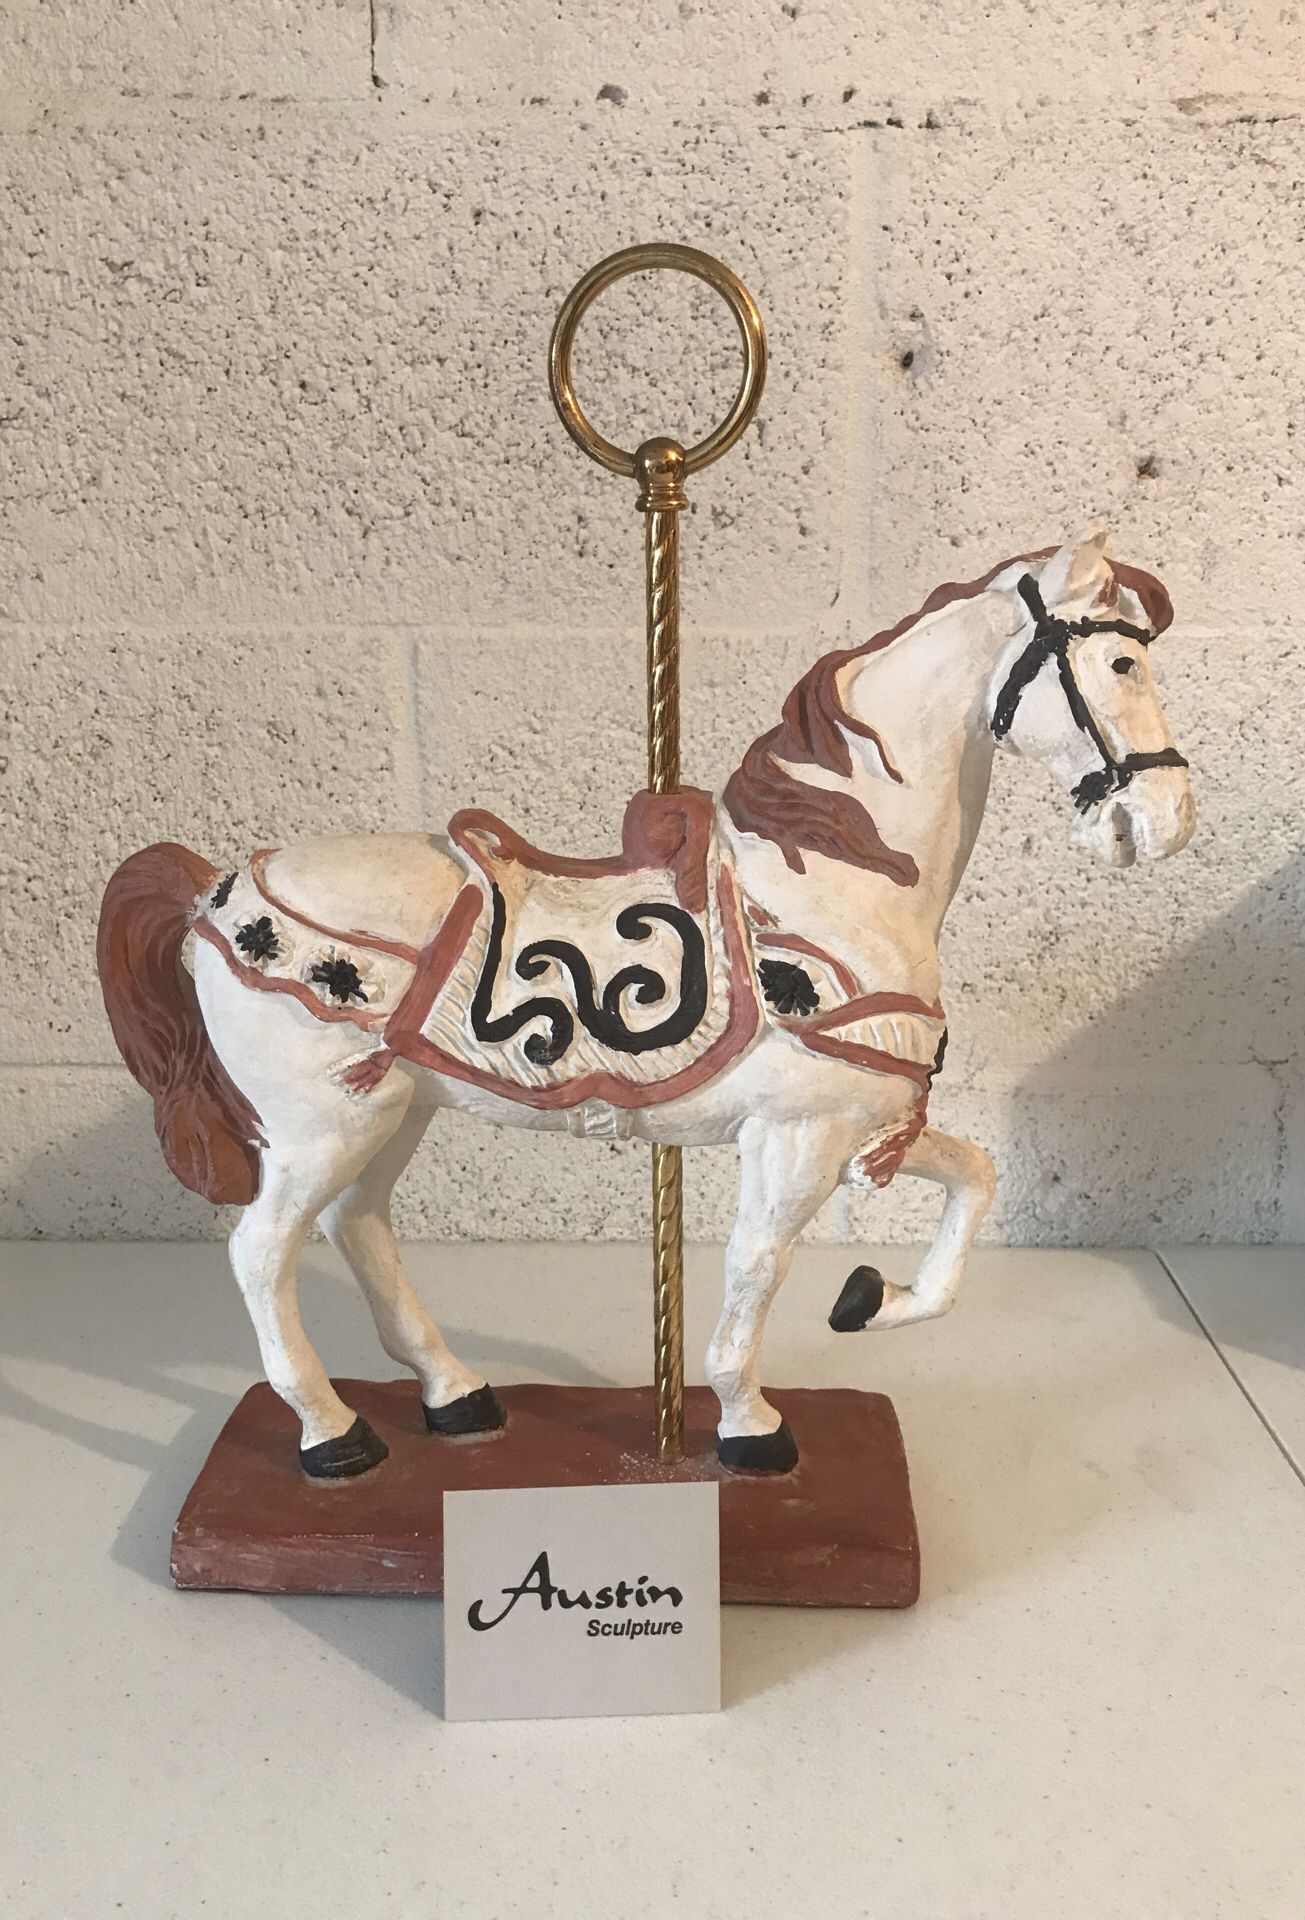 Austin sculpture “carousel horse”